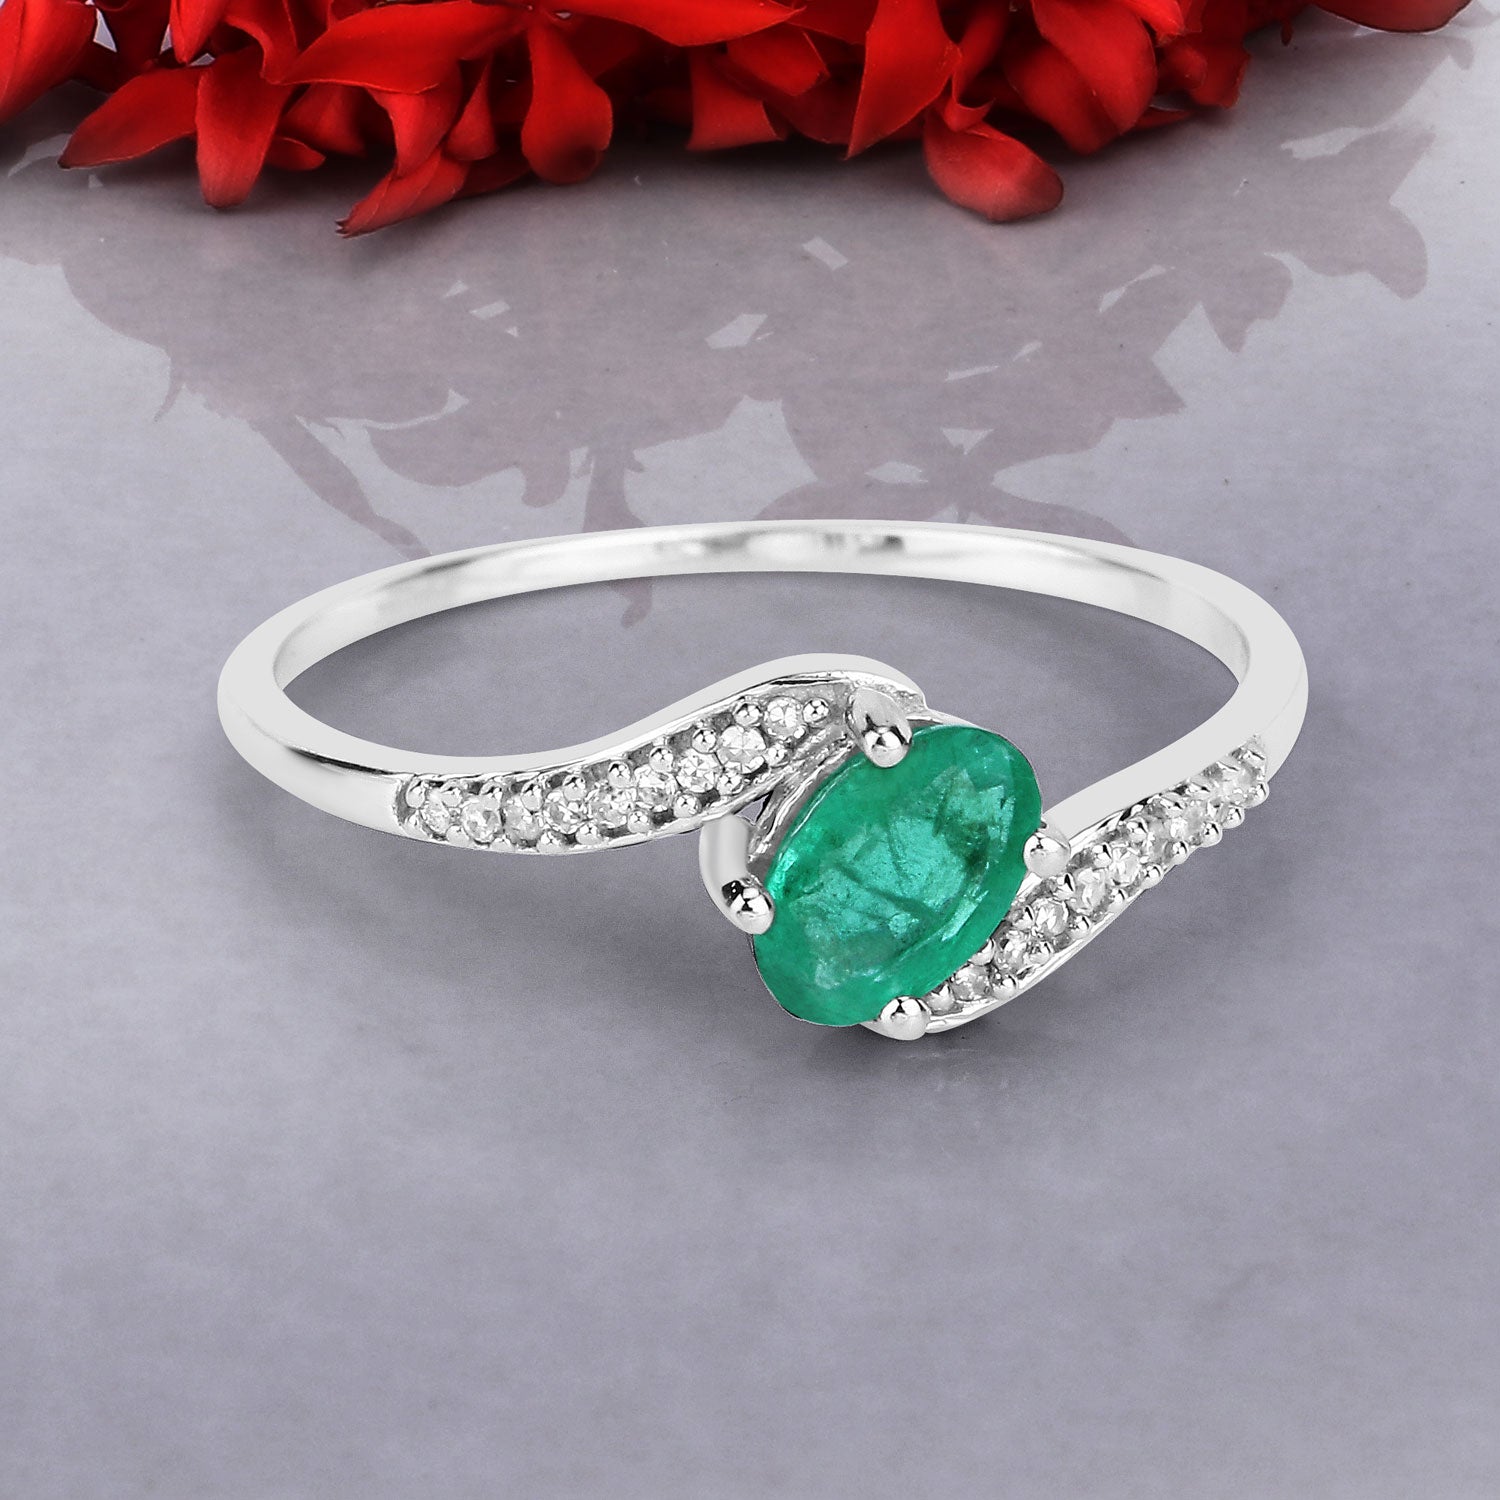 Genuine Zambian Emerald & White Diamond 14K White Gold Ring